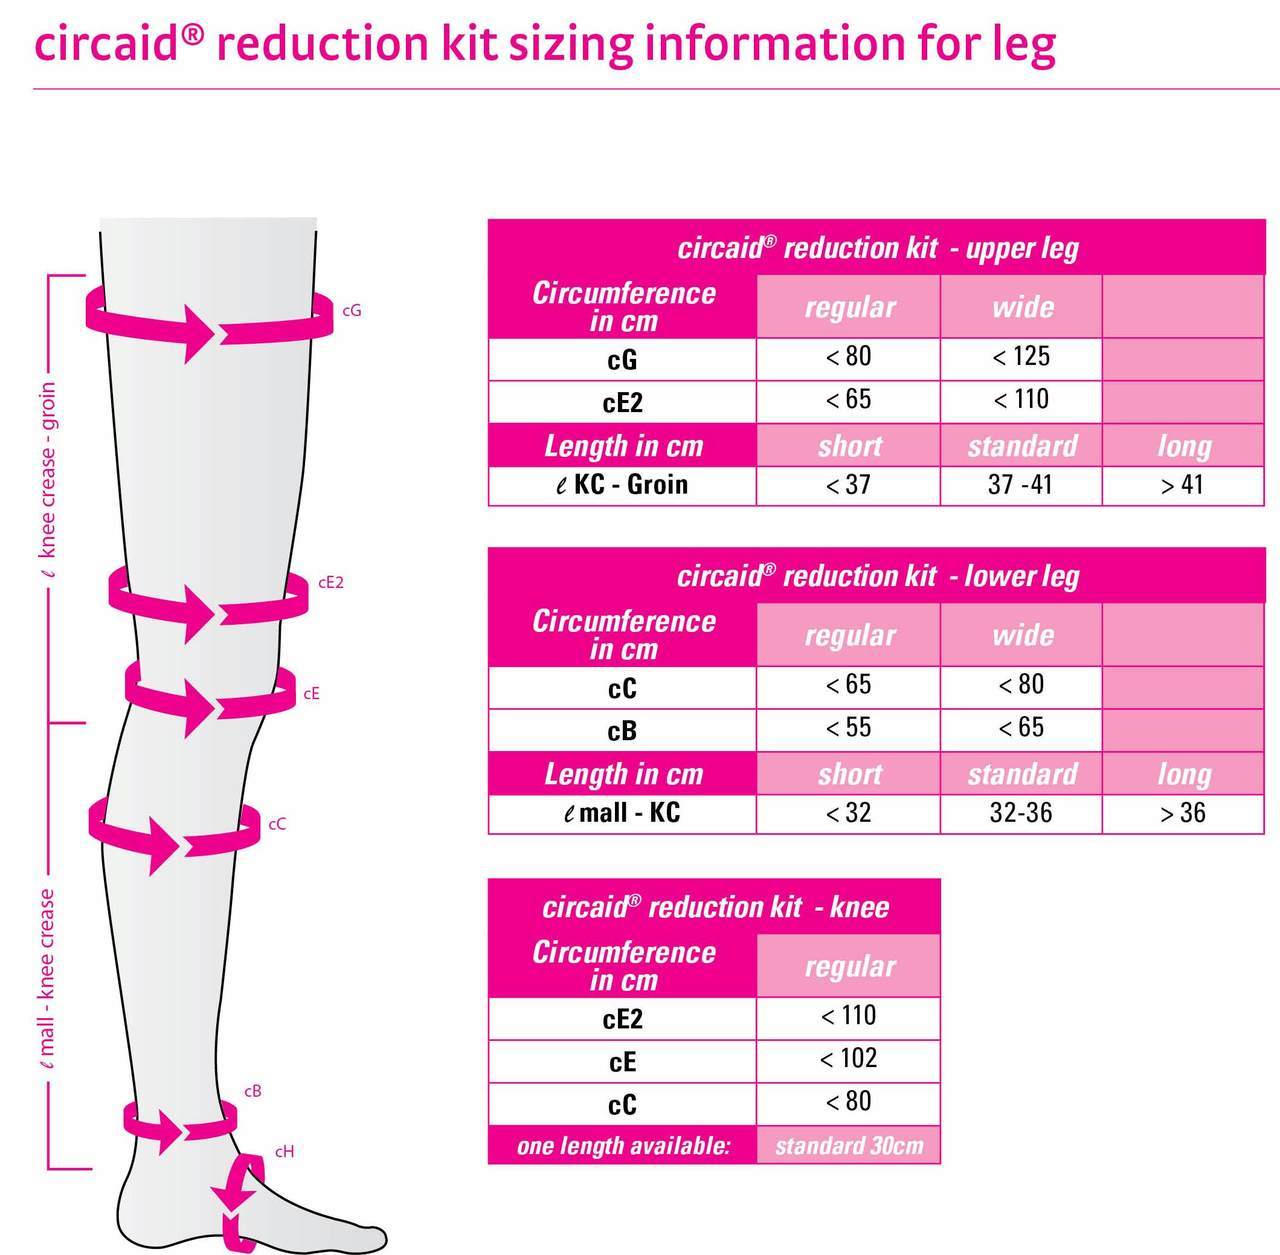 circaid reduction kit upper leg